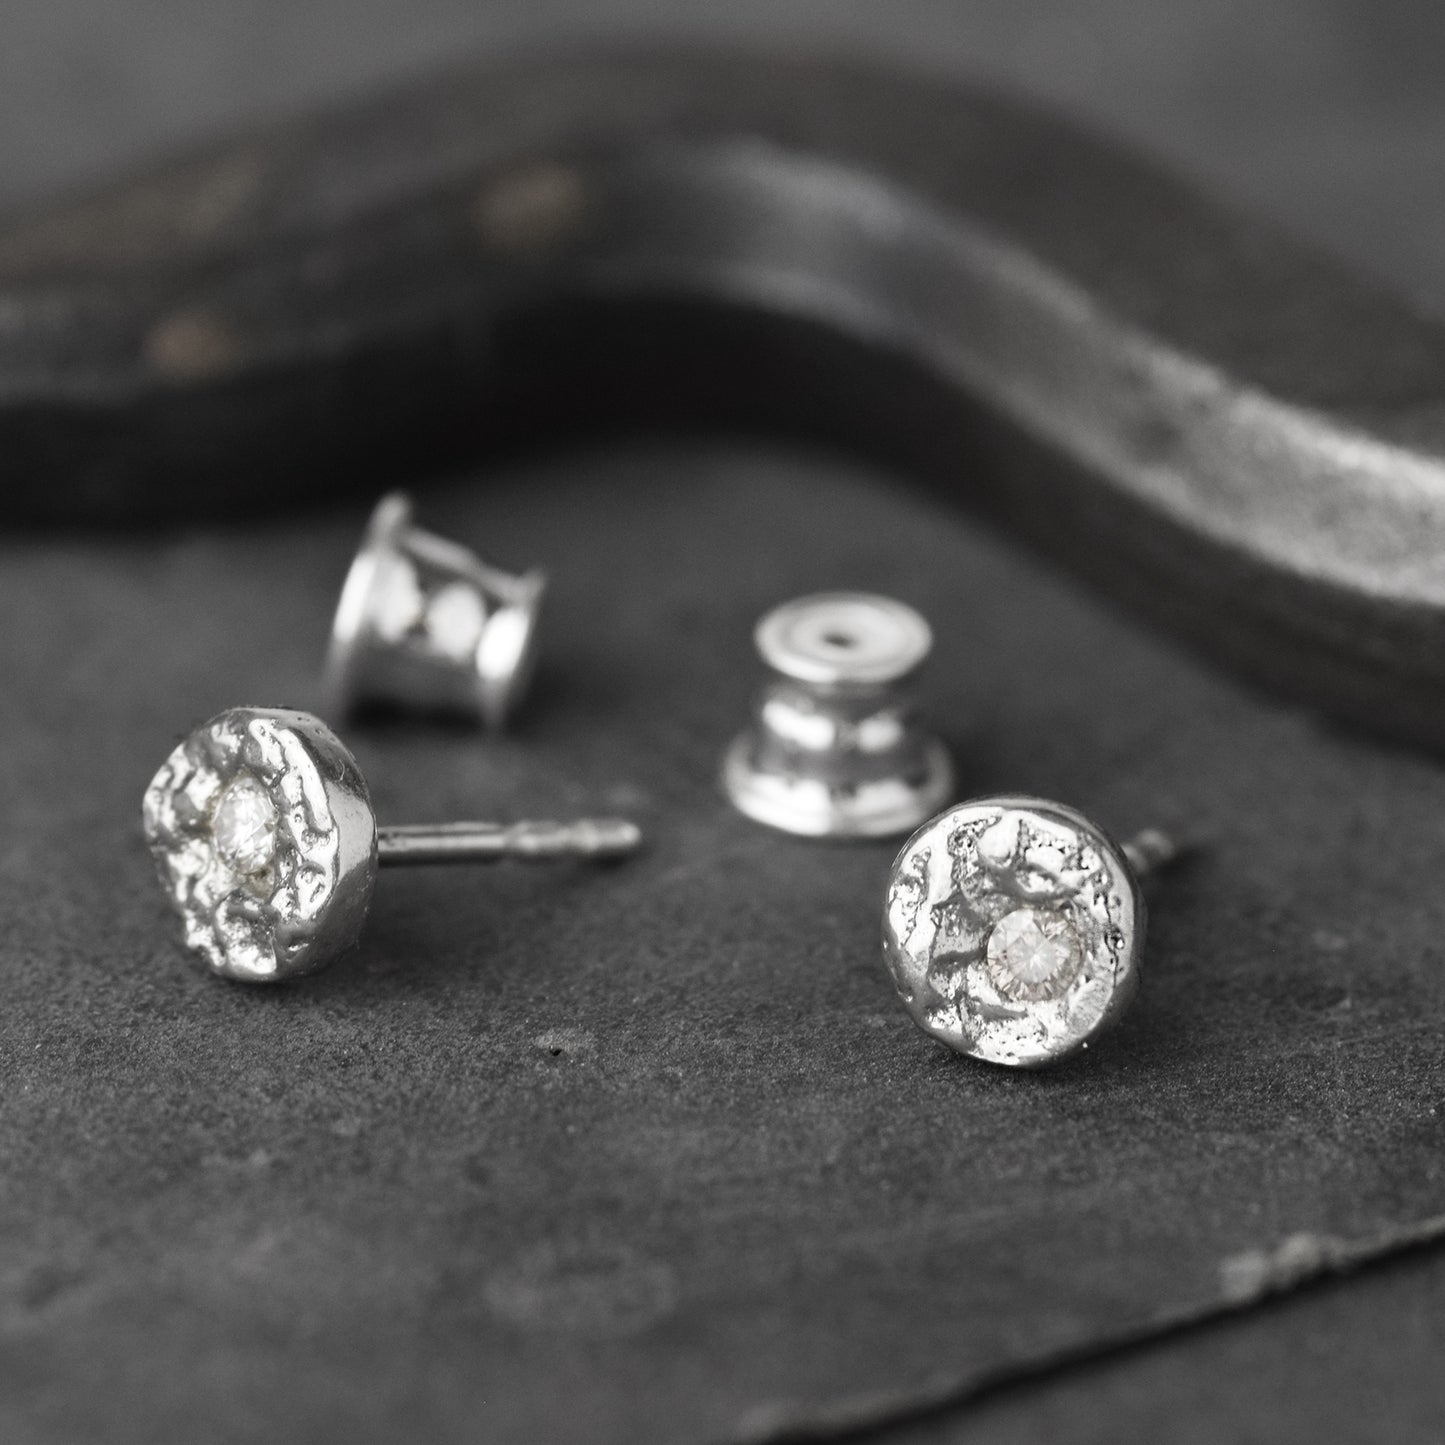 Emiw - Silver Earrings With A White Moissanite Diamond